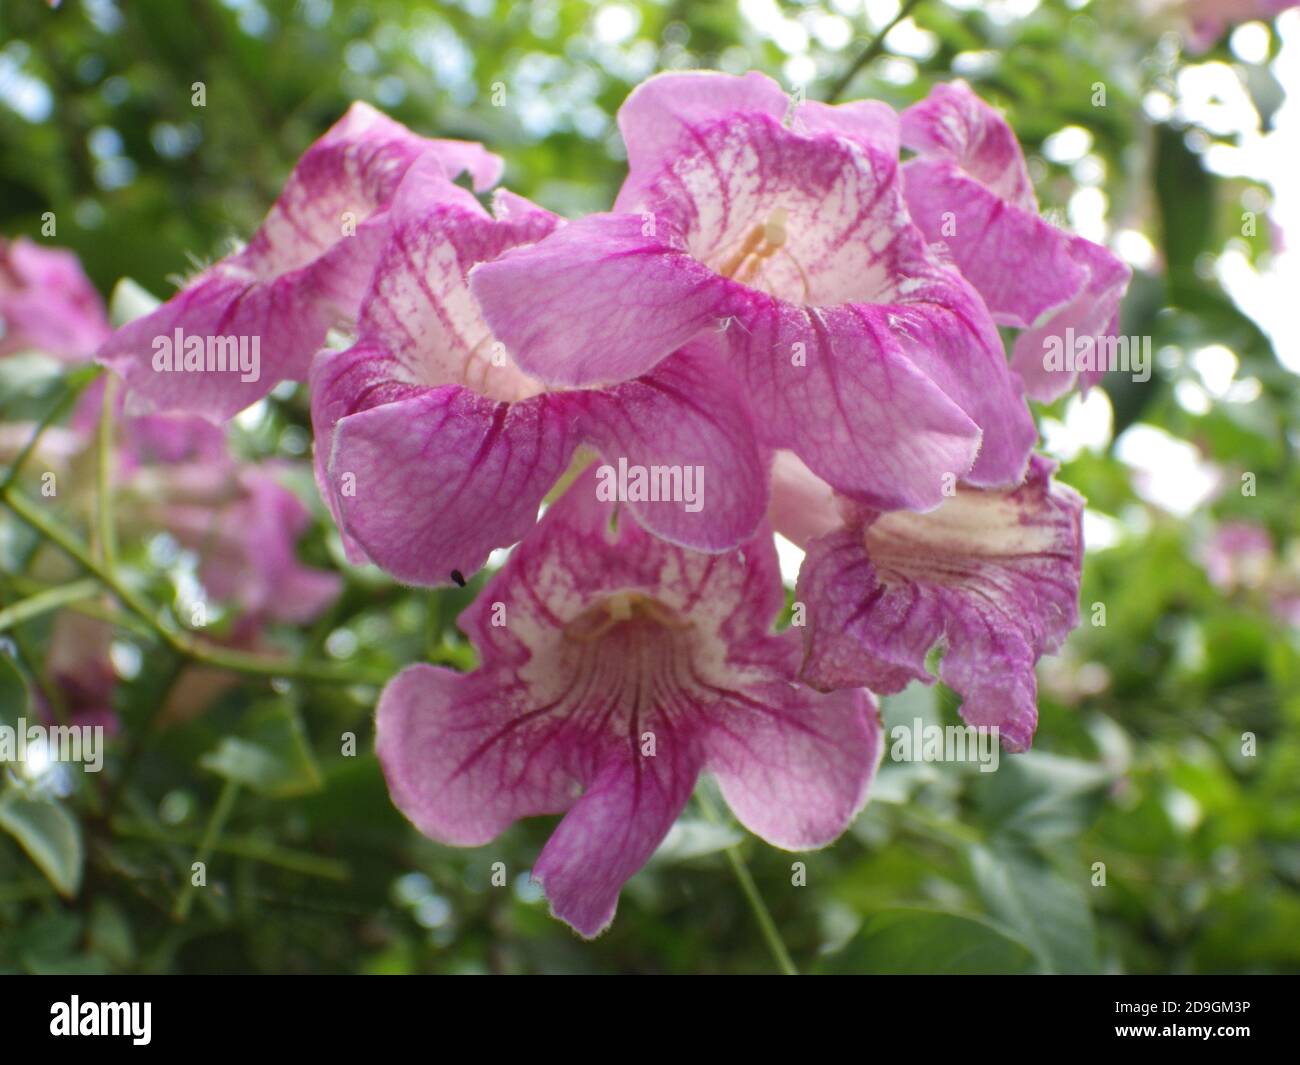 Closeup shot of Clytostoma flowers Stock Photo